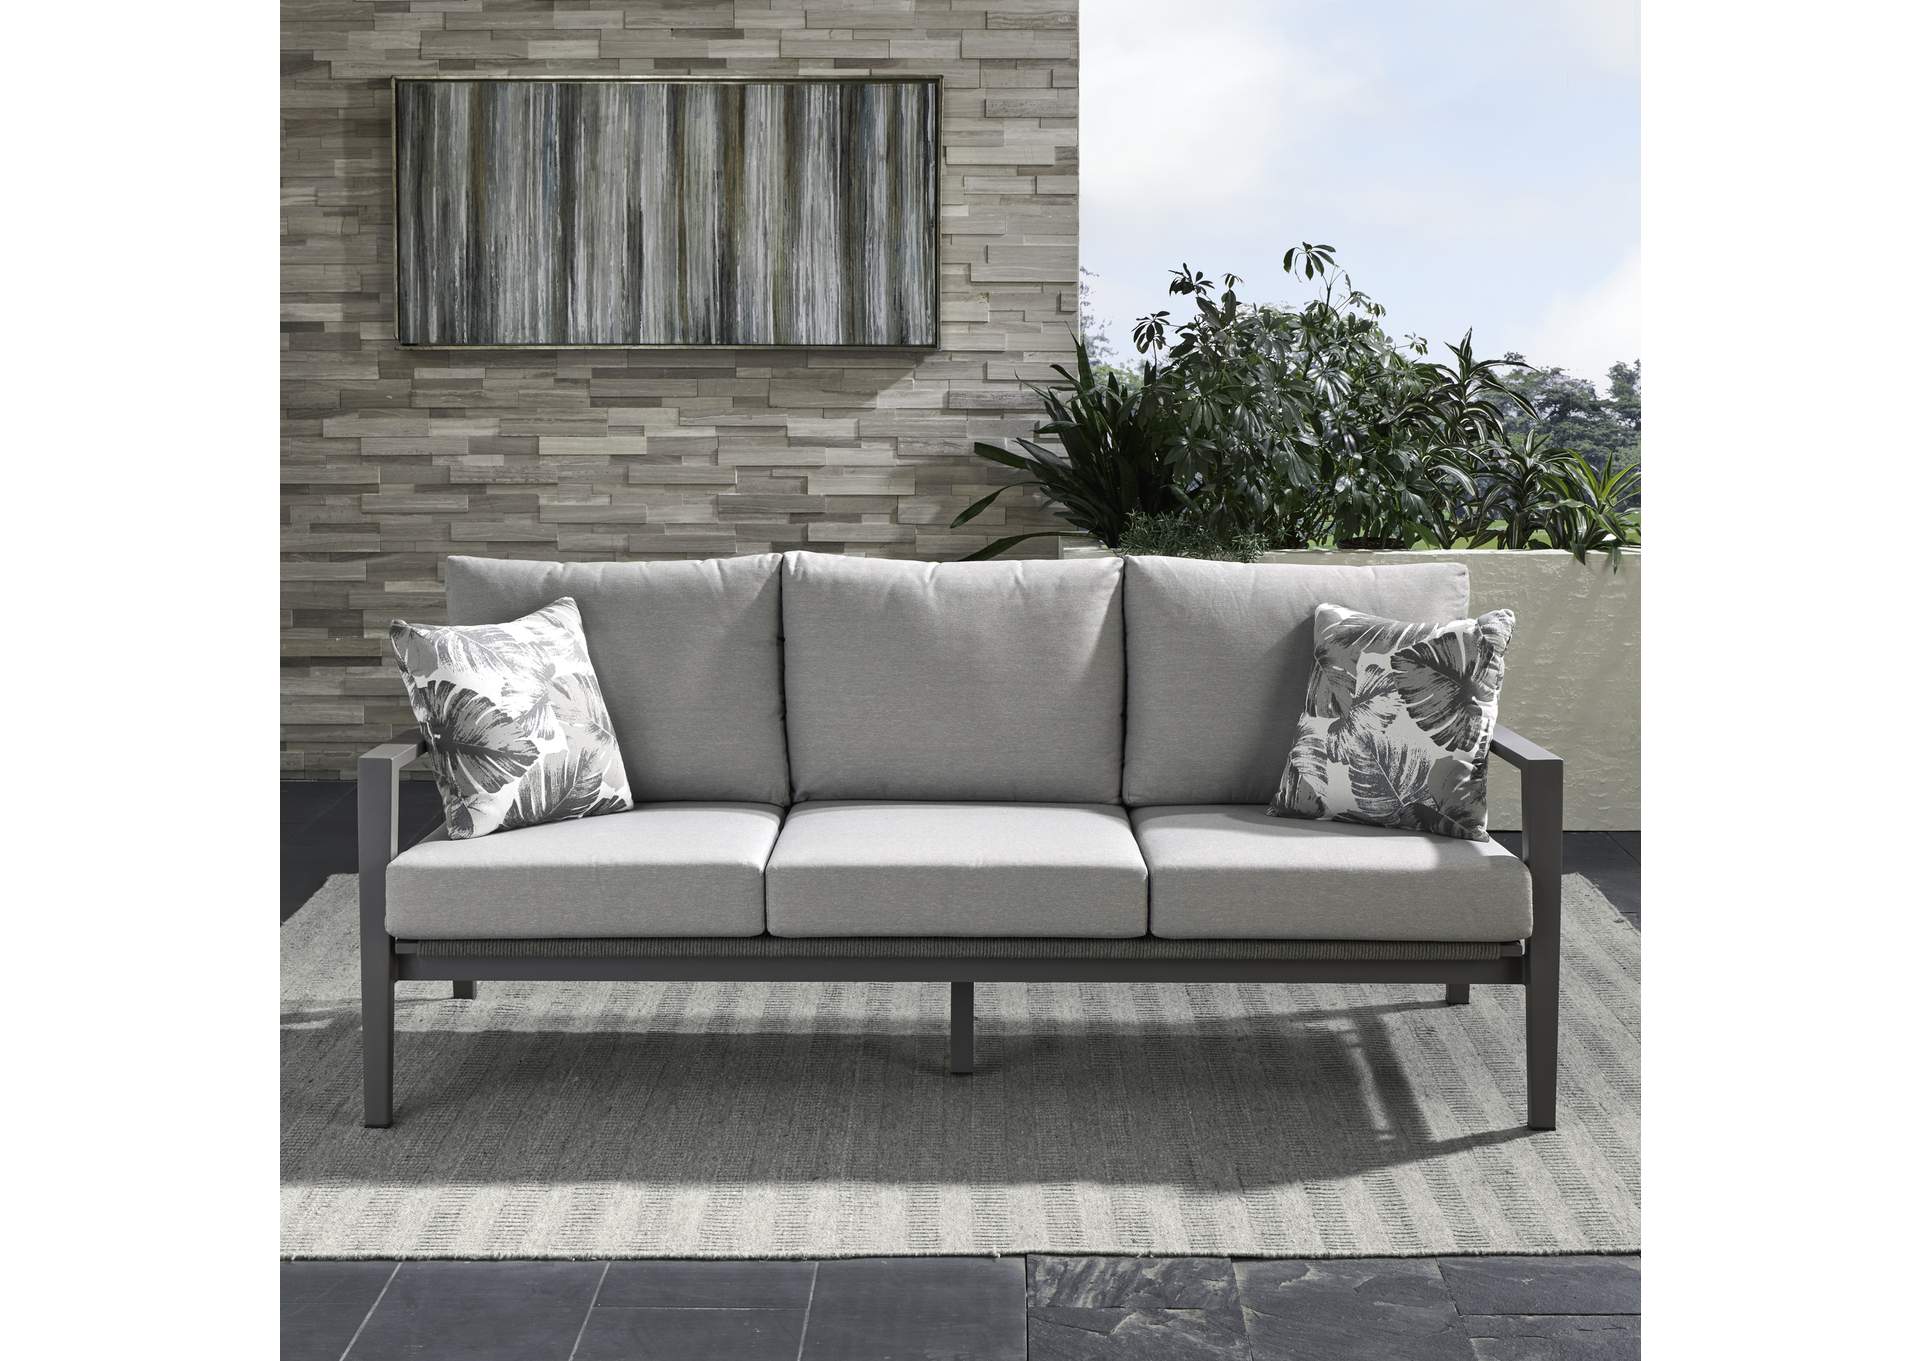 Plantation Key Outdoor Sofa - Granite,Liberty